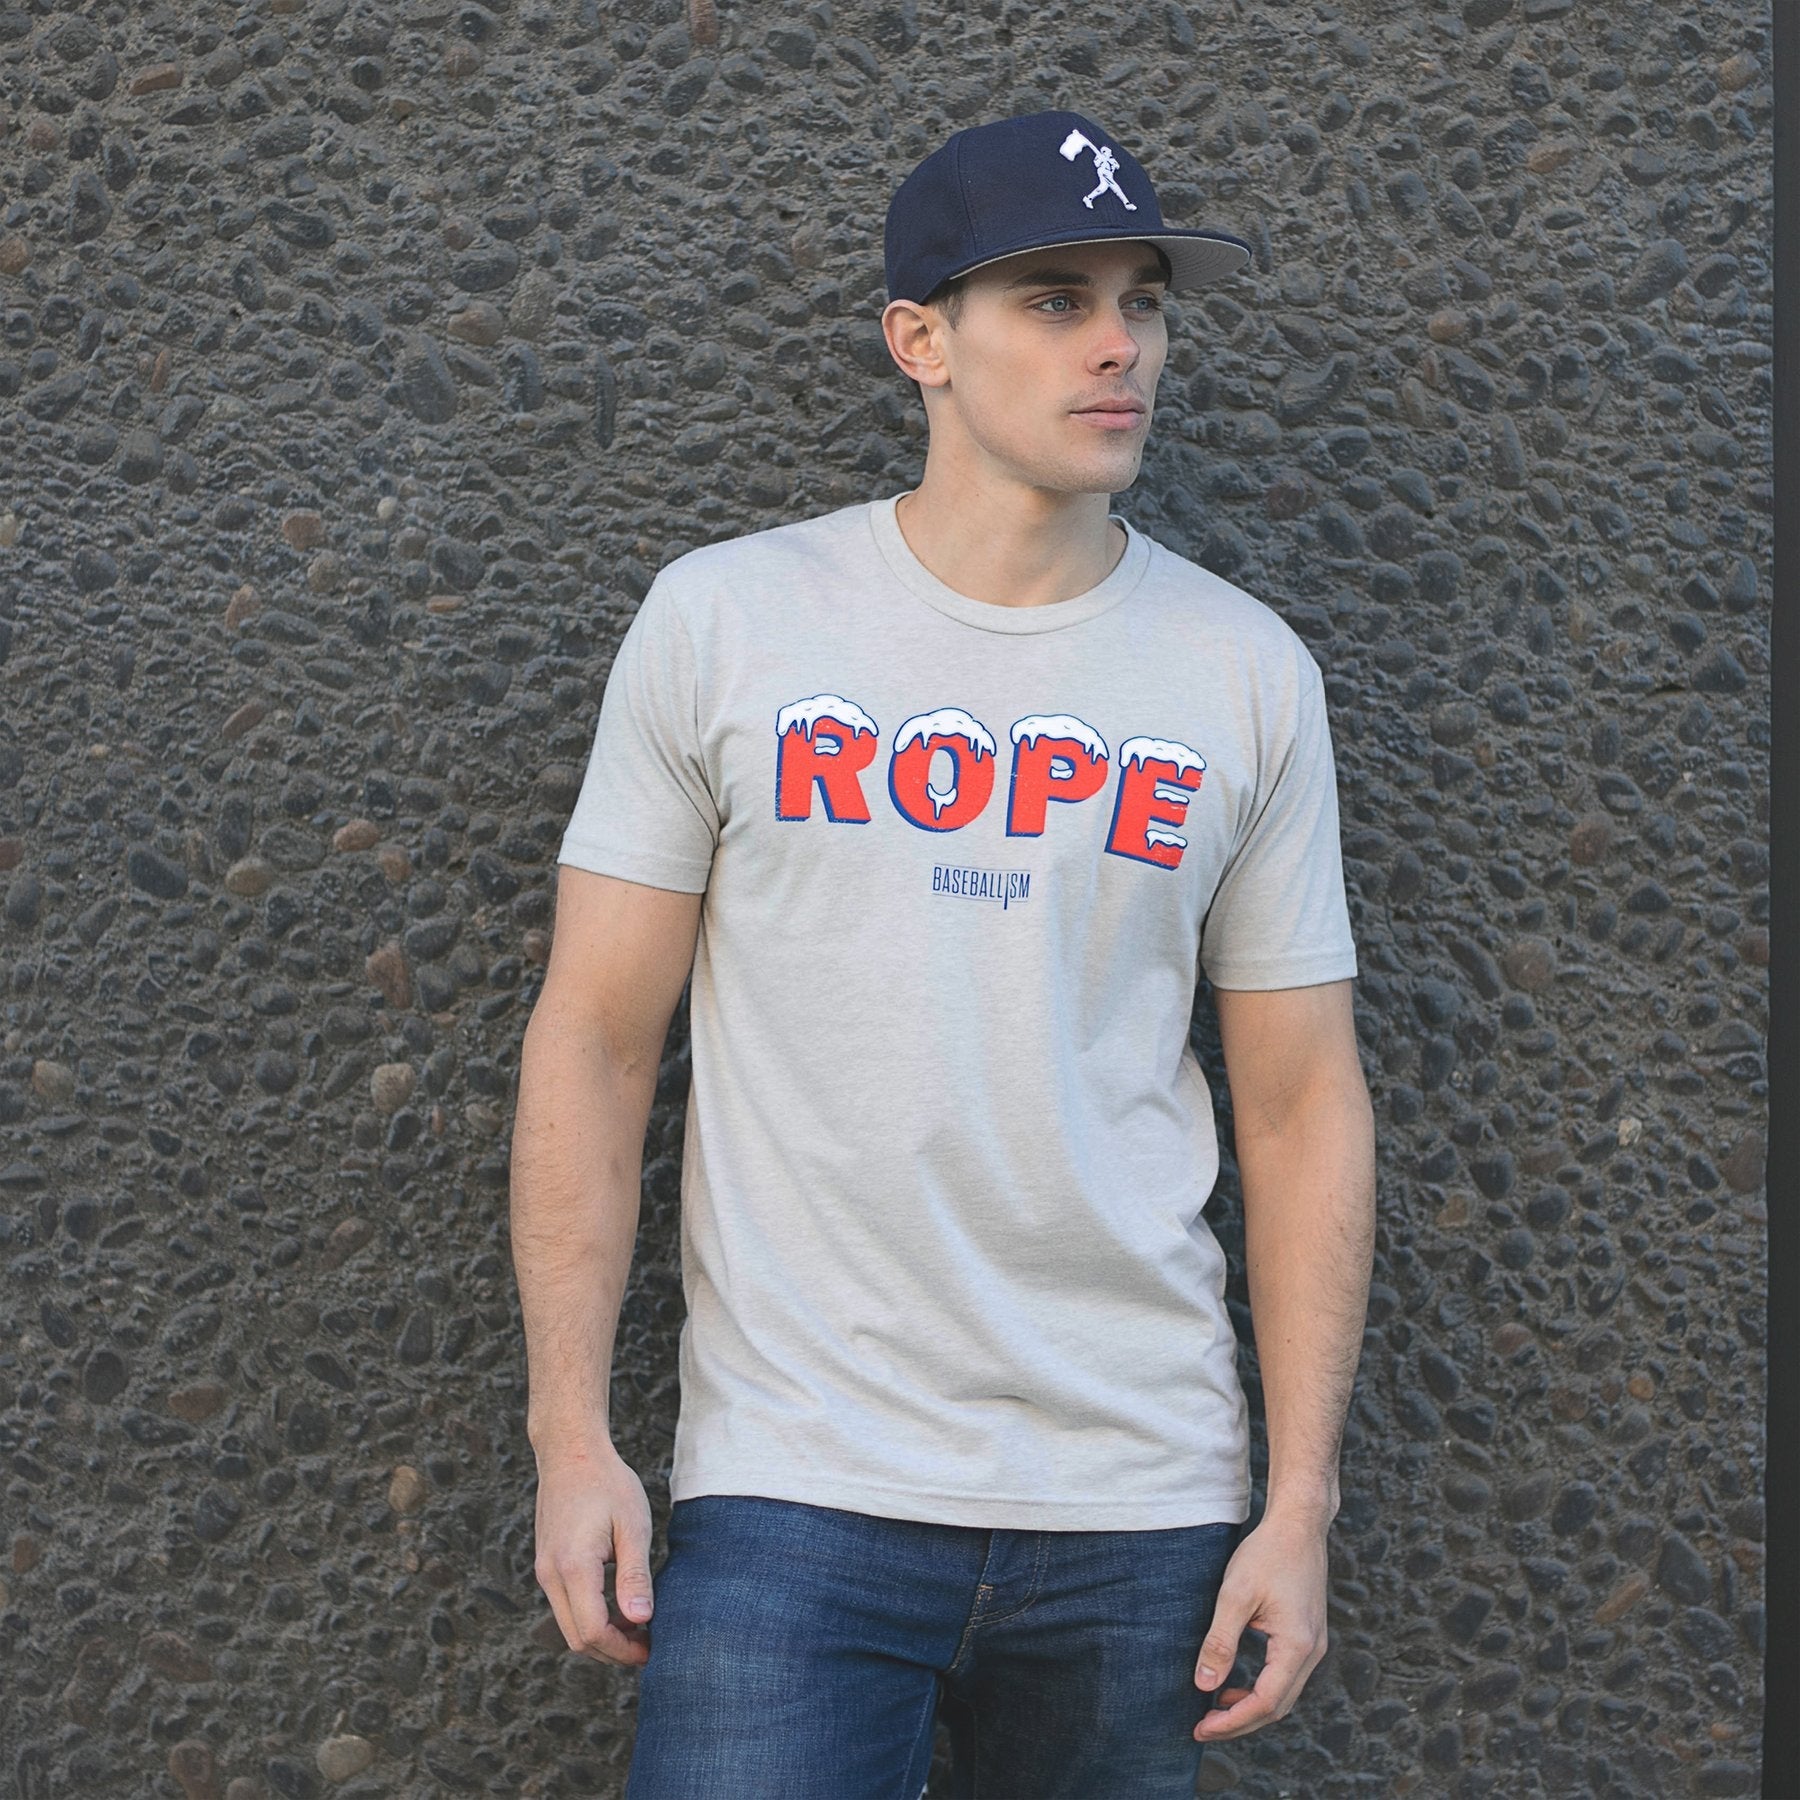 Baseballism - Frozen Rope T-Shirt (Men's)